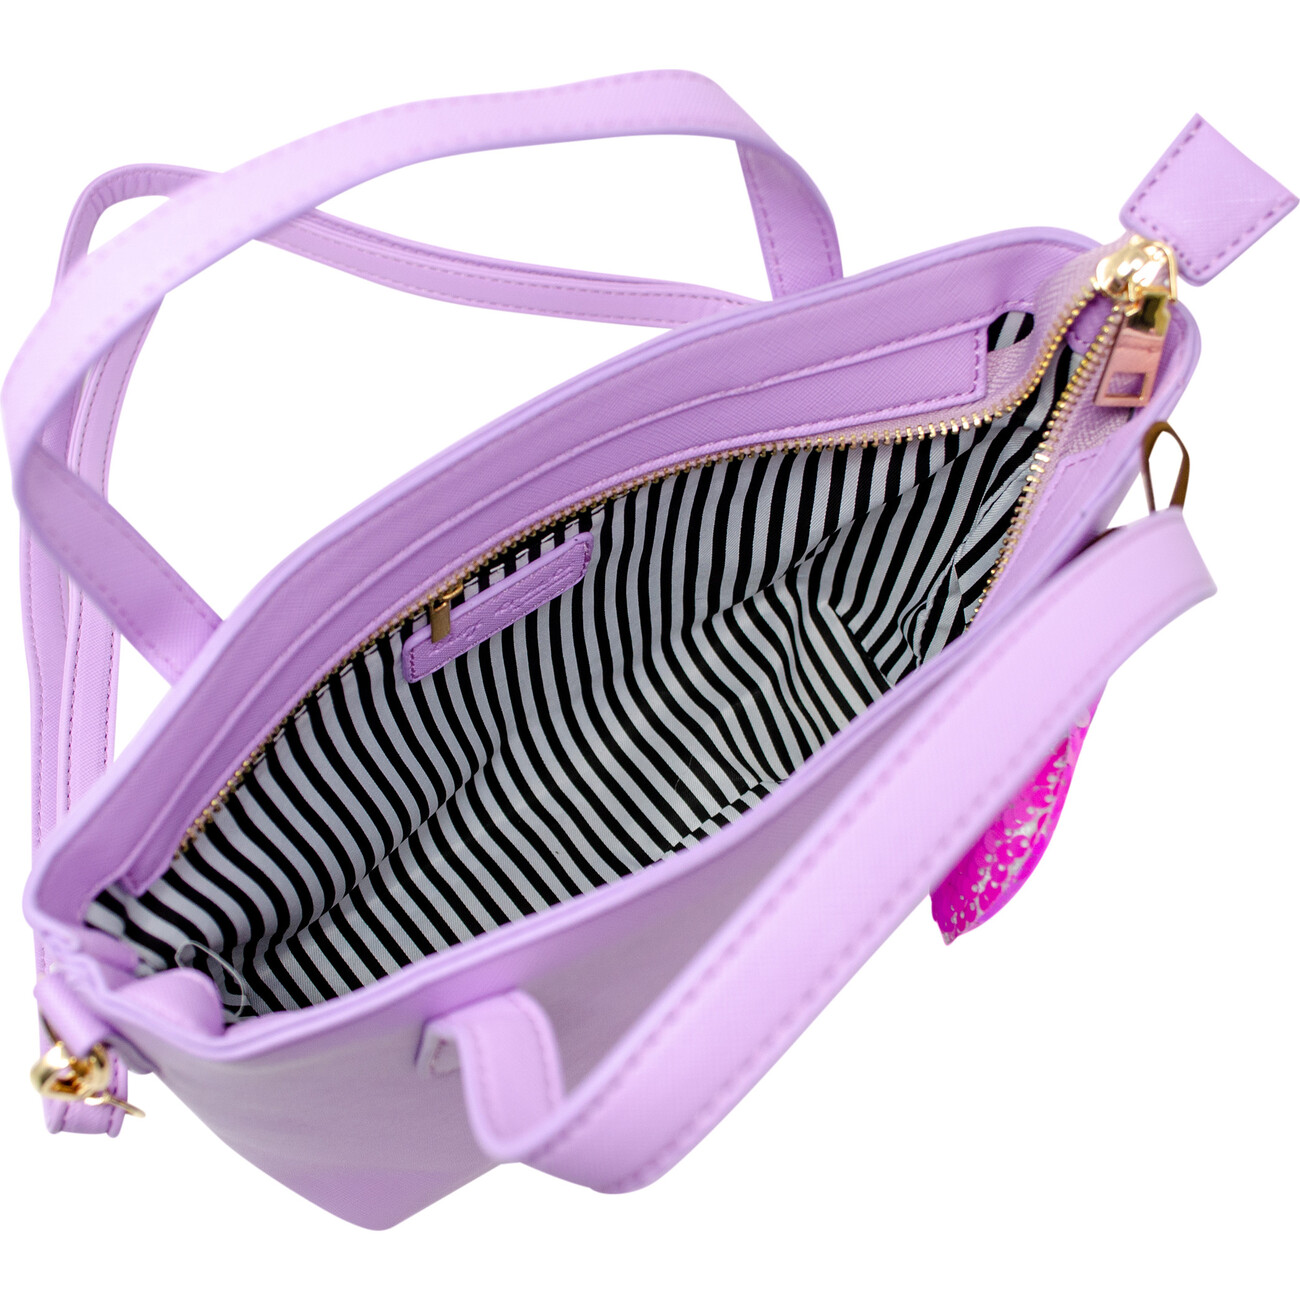 Zomi Gems Lavender Pony Handbag